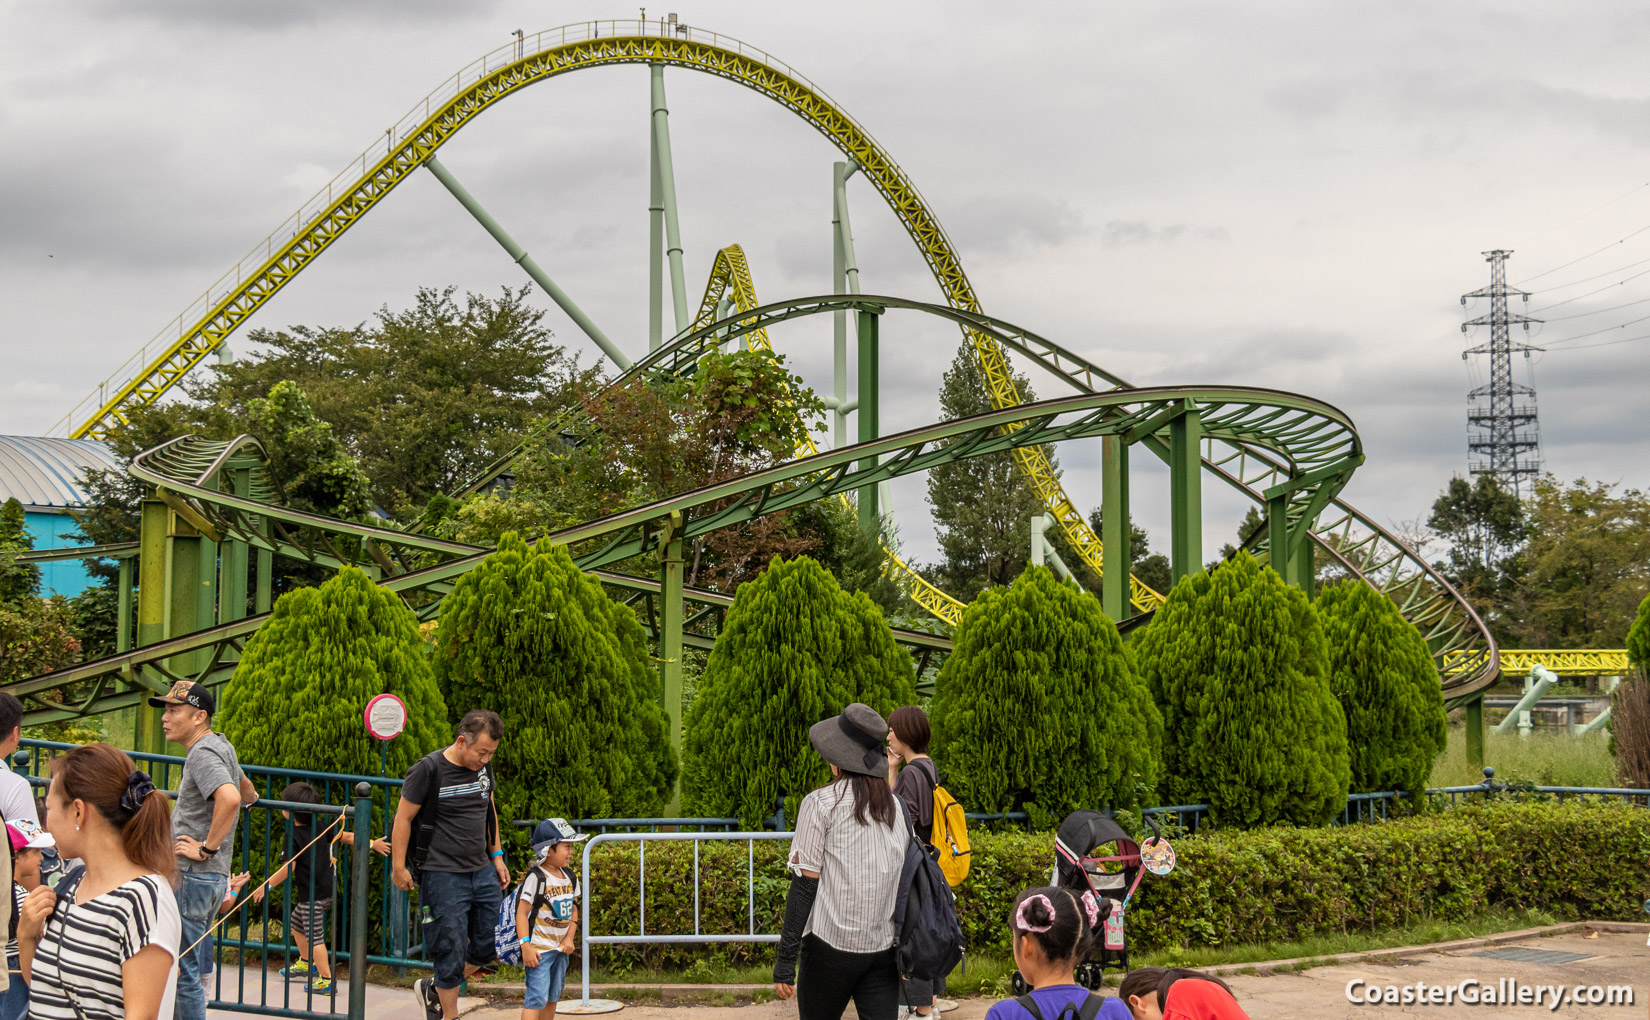 Tentomushi roller coaster at the Tobu Zoo in Japan